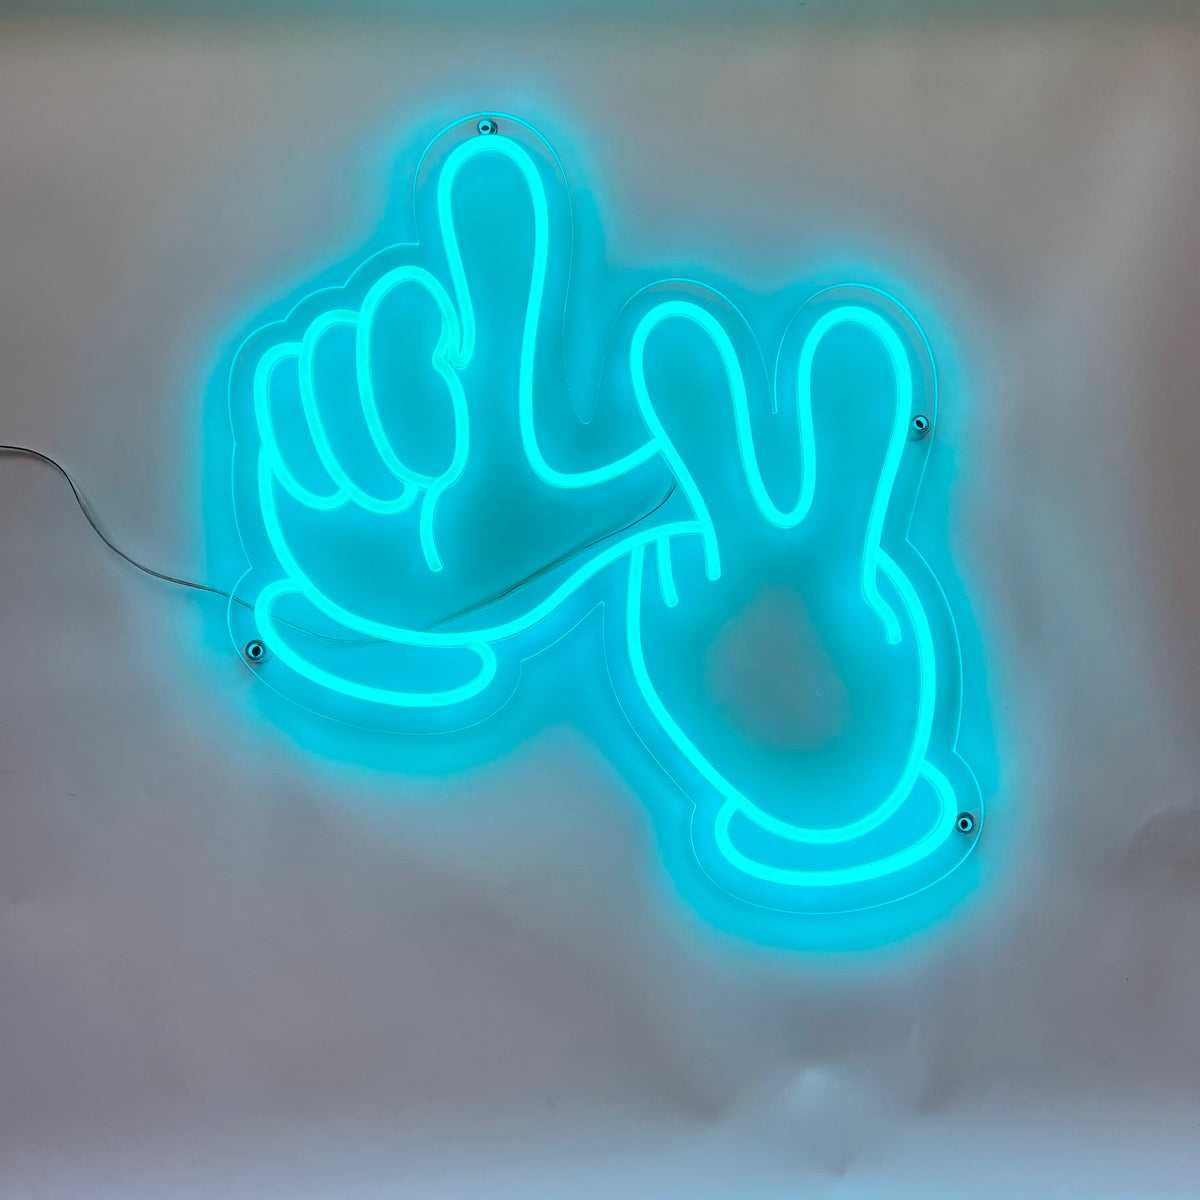 Louis Drip' Neon Sign